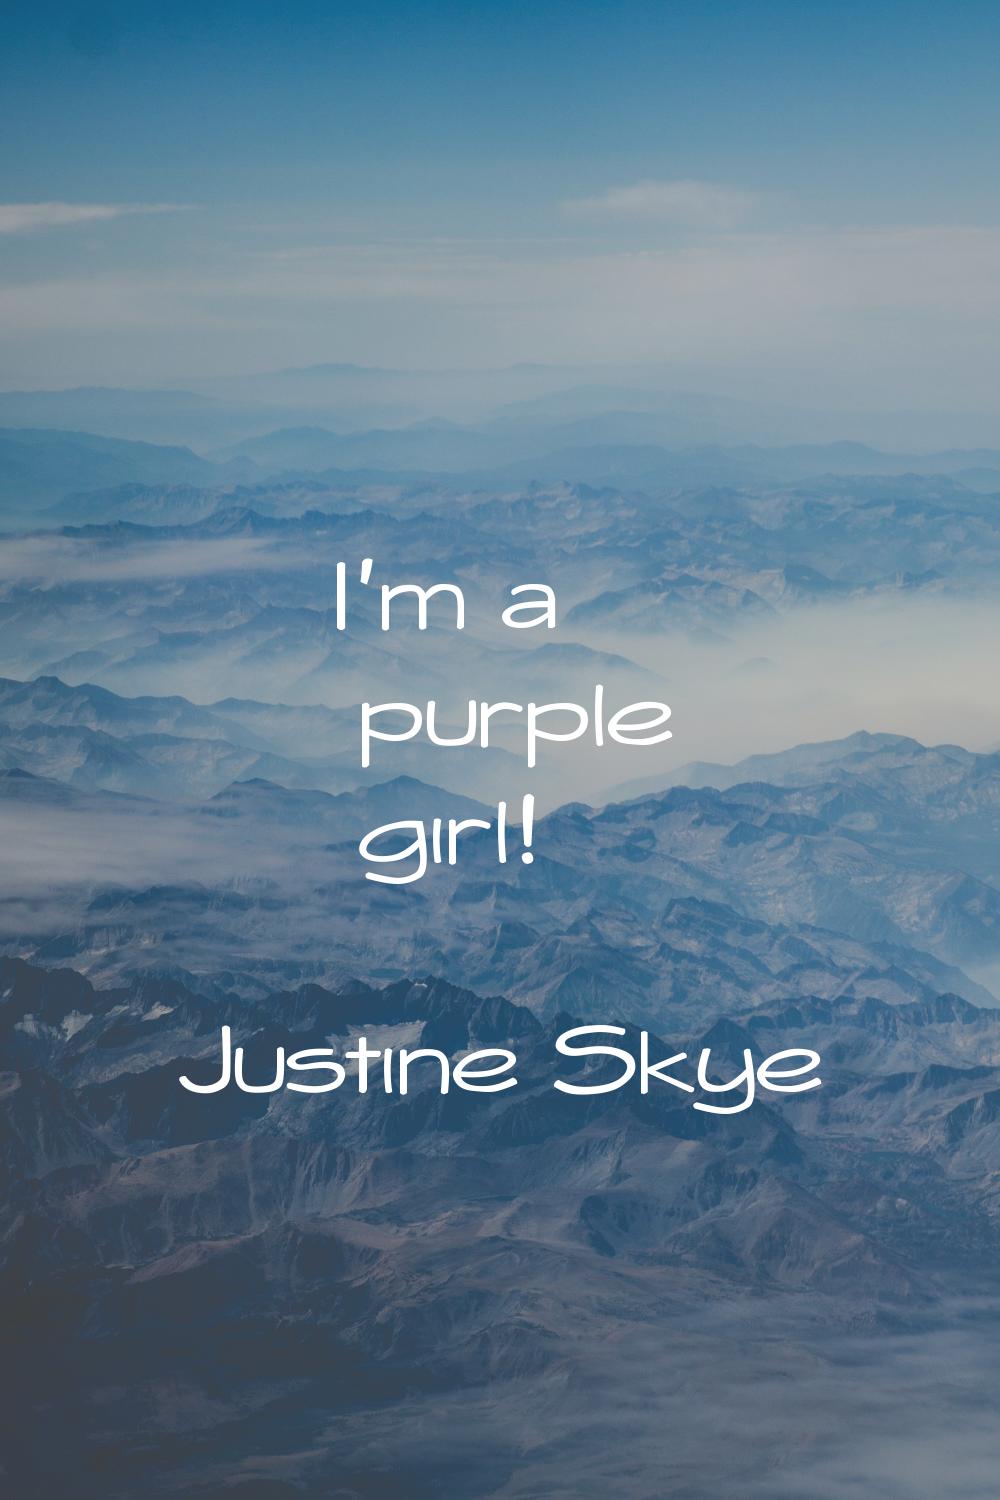 I'm a purple girl!